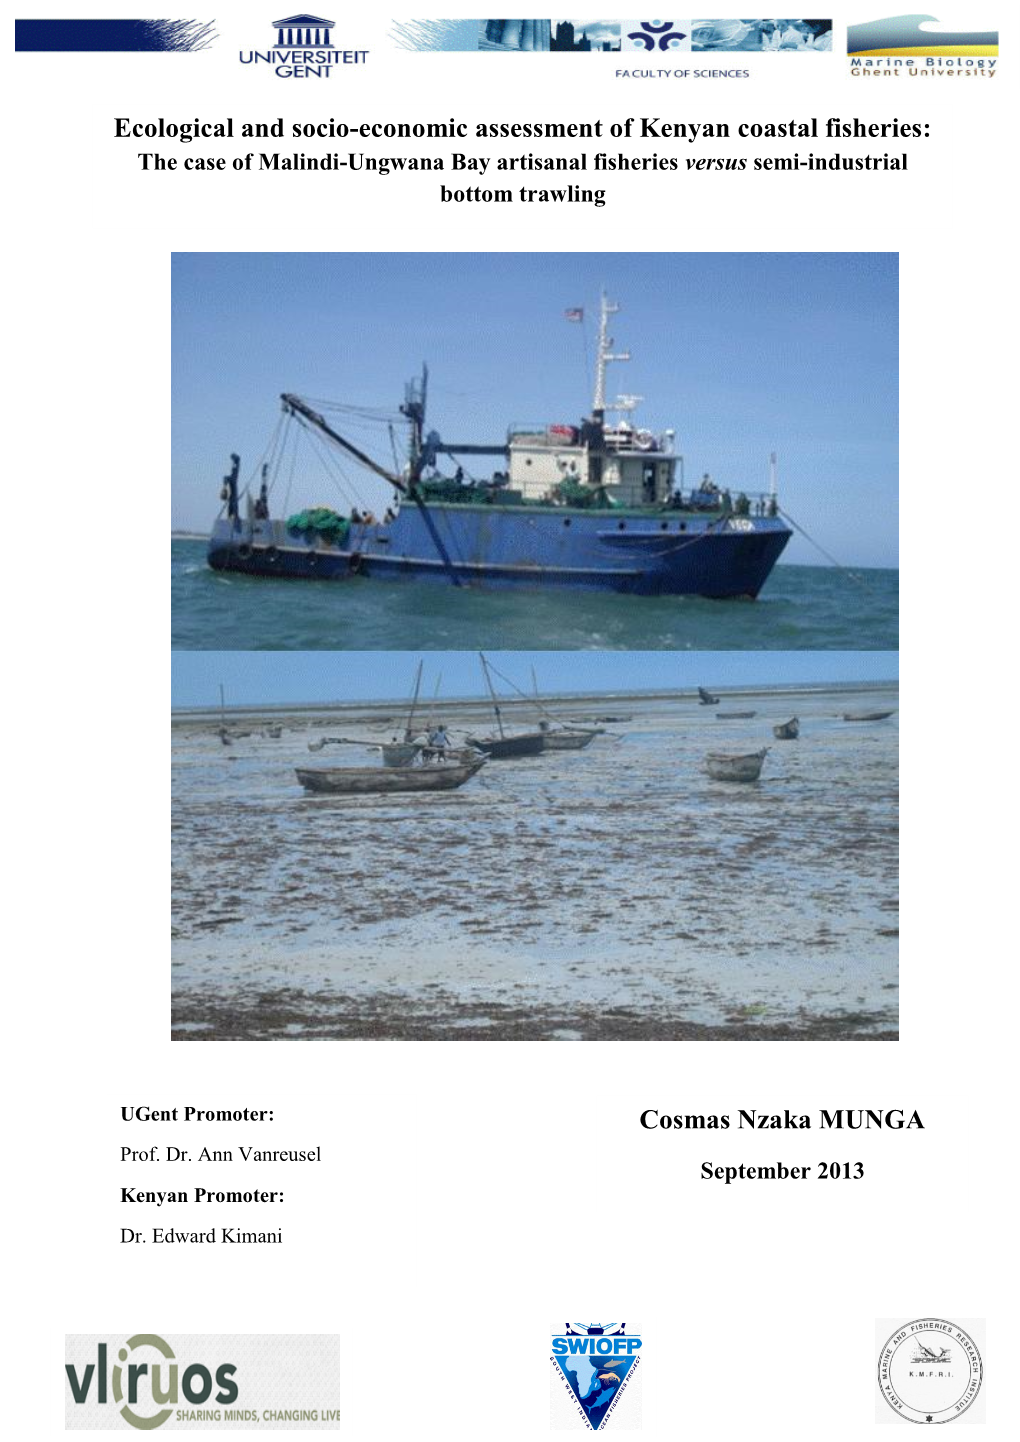 Ecological and Socio-Economic Assessment of Kenyan Coastal Fisheries: the Case of Malindi-Ungwana Bay Artisanal Fisheries Versus Semi-Industrial Bottom Trawling